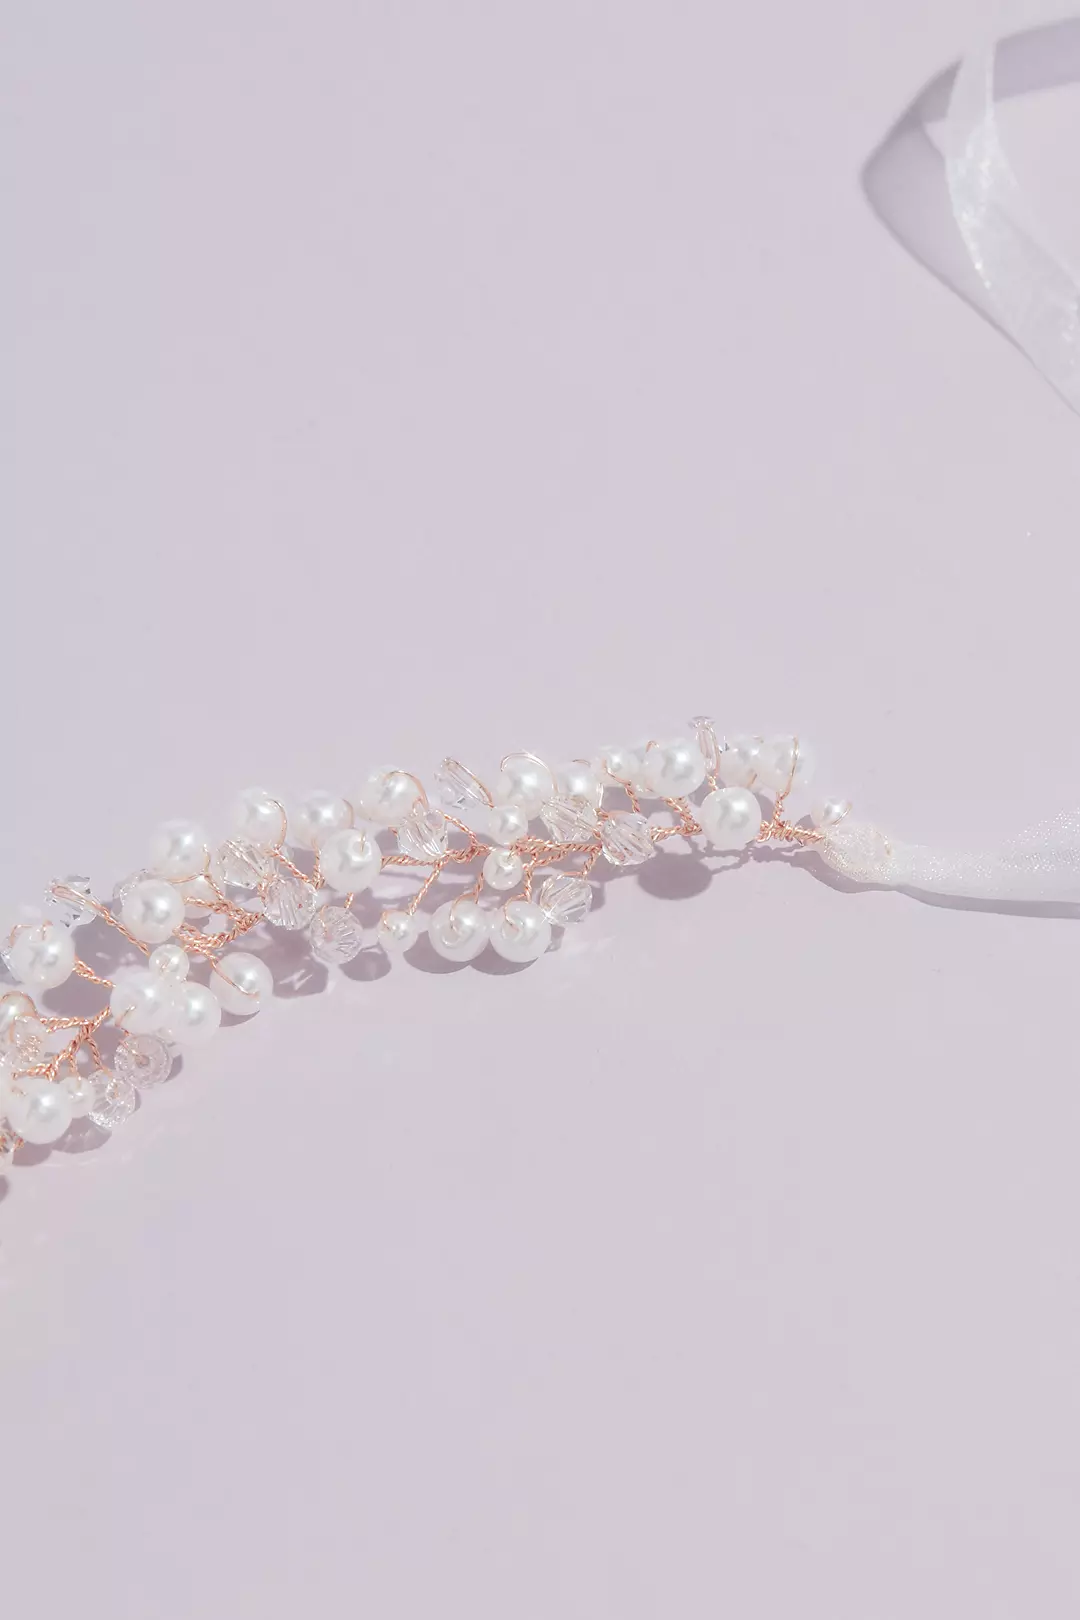 Pearl and Crystal Hair Wreath with Organza Ribbon Image 2